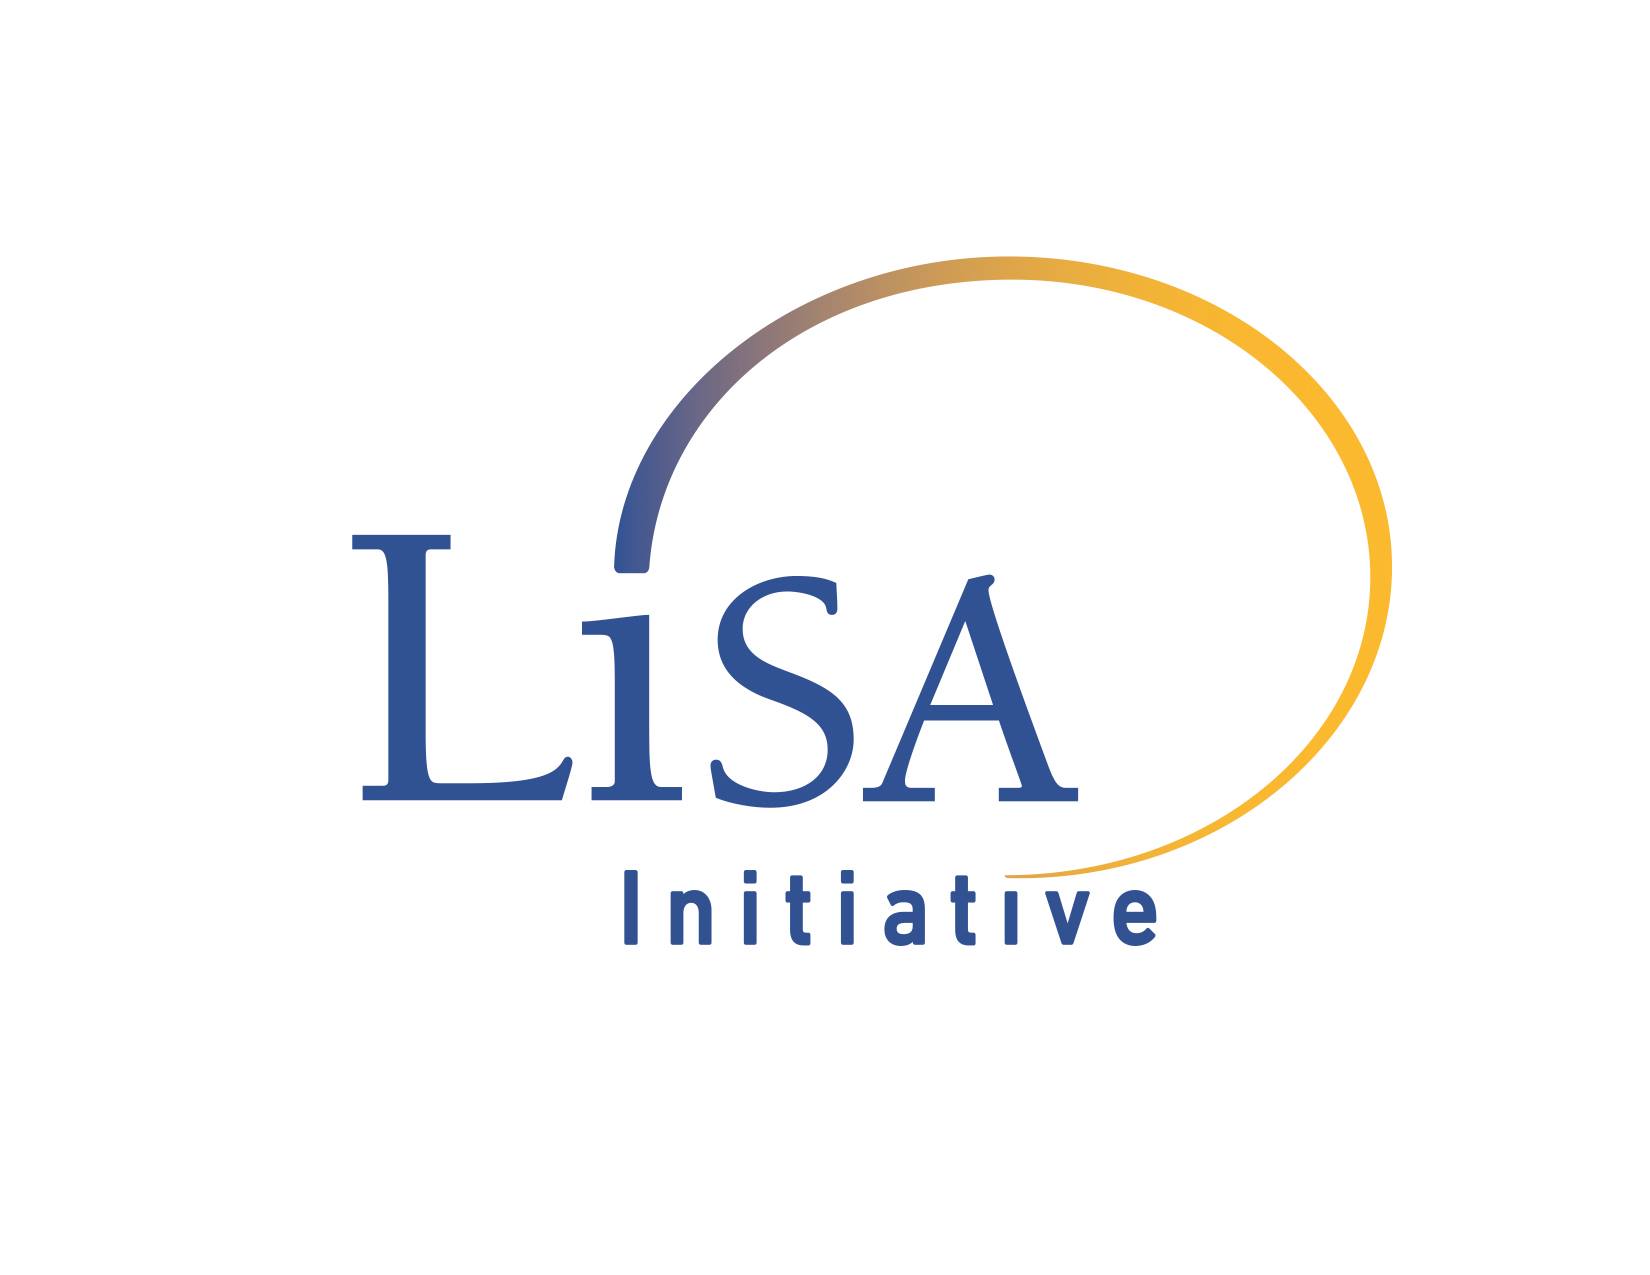 Lisa Initiative